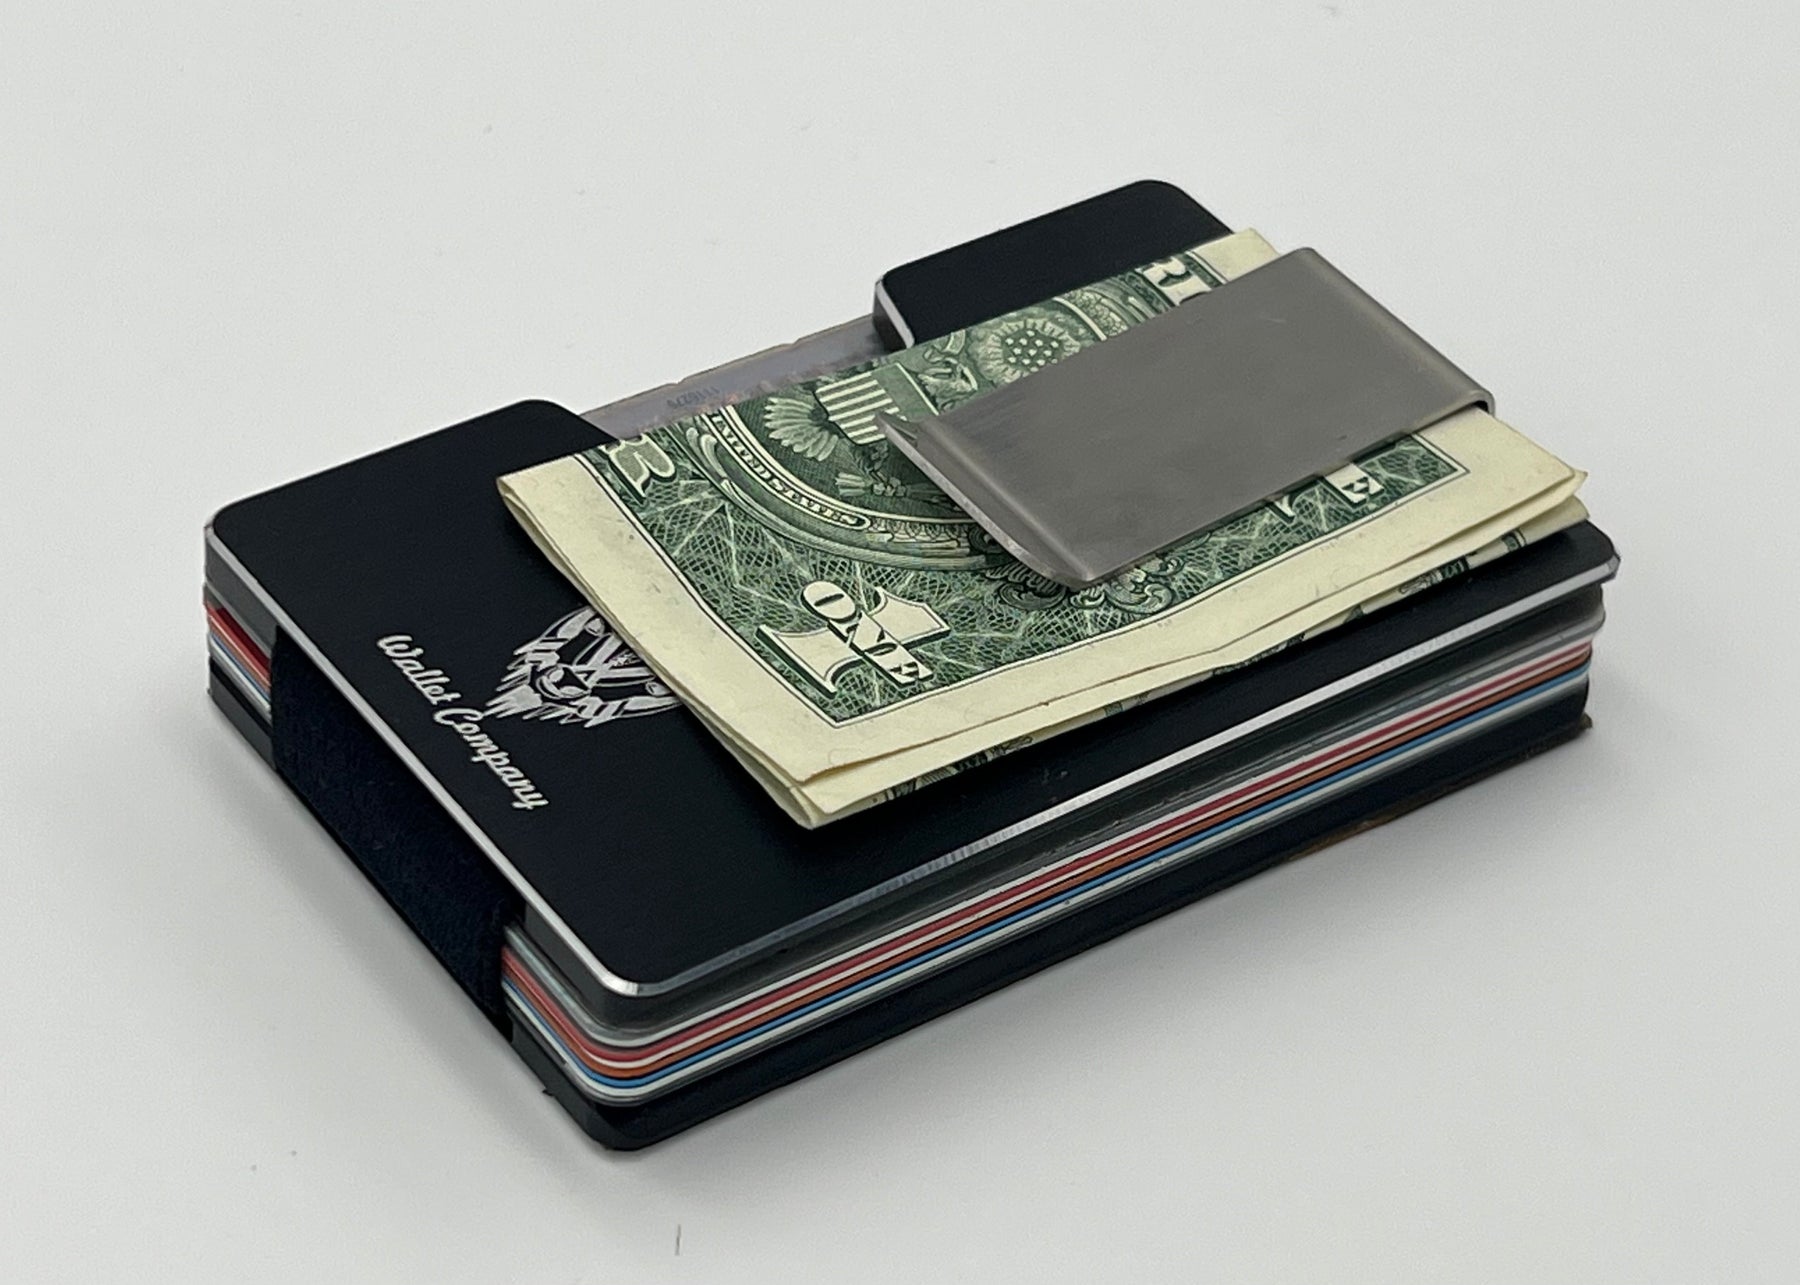 Apex Wood Inlay Wallet